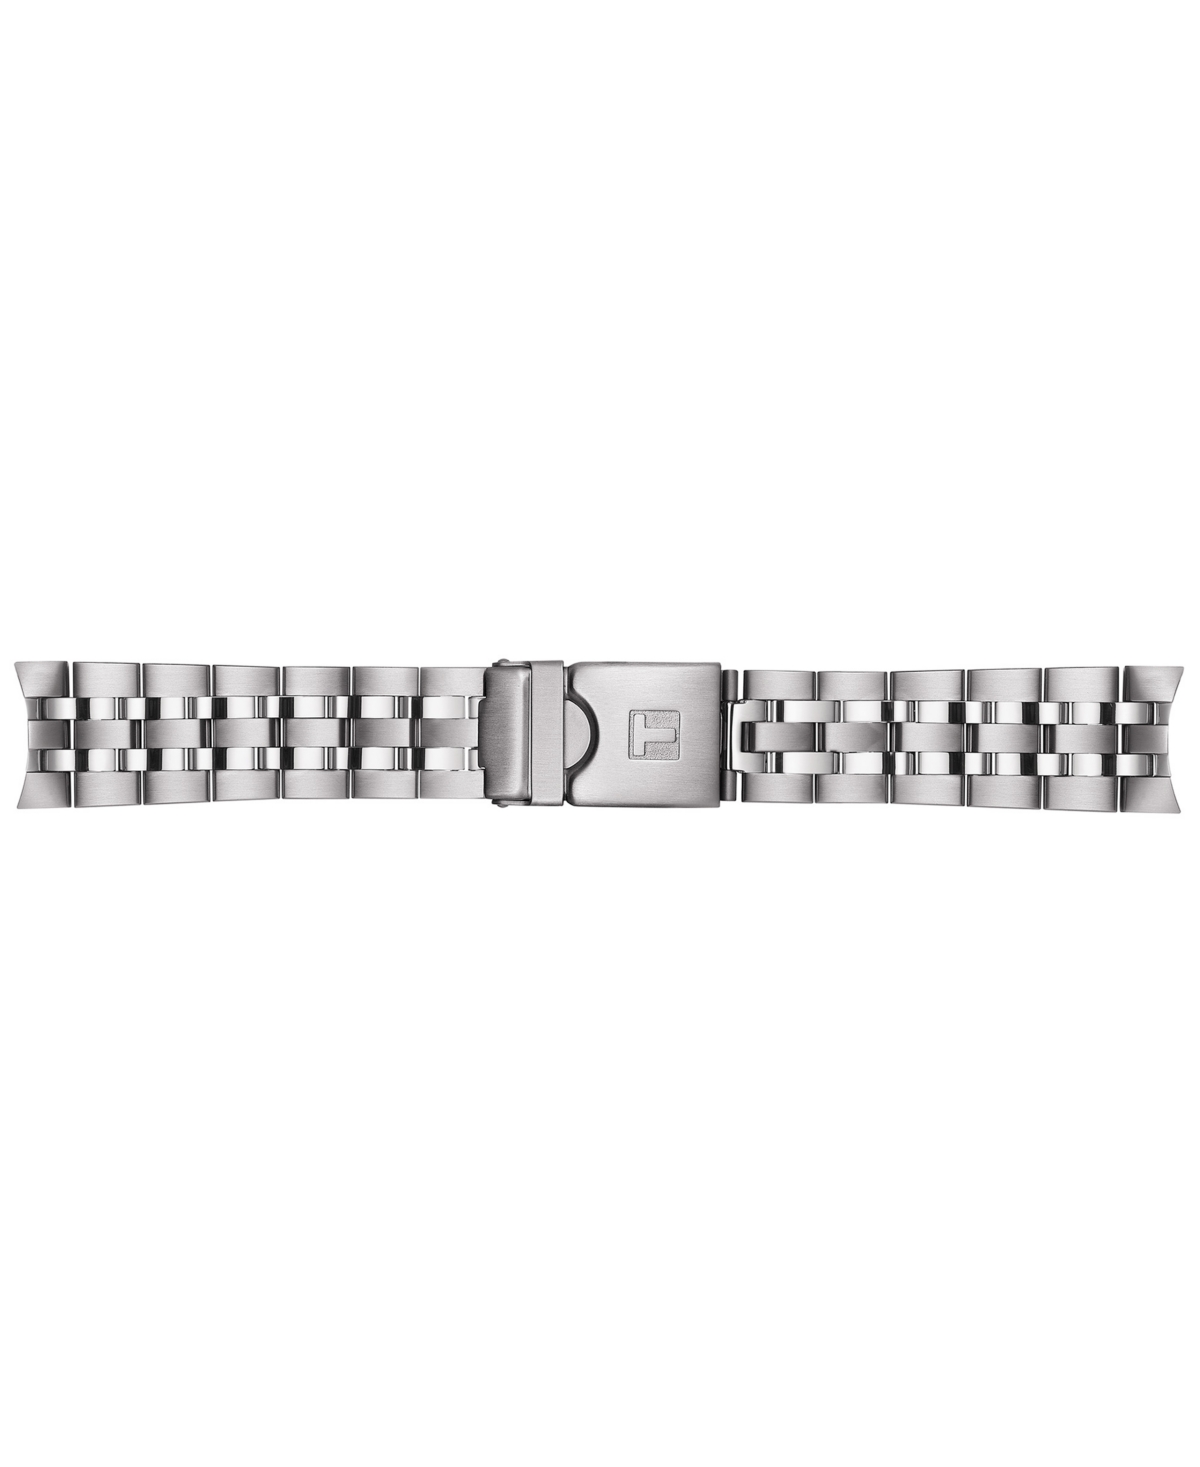 Shop Tissot Men's Swiss Chronograph Prc 200 Stainless Steel Bracelet Watch 43mm In Blue